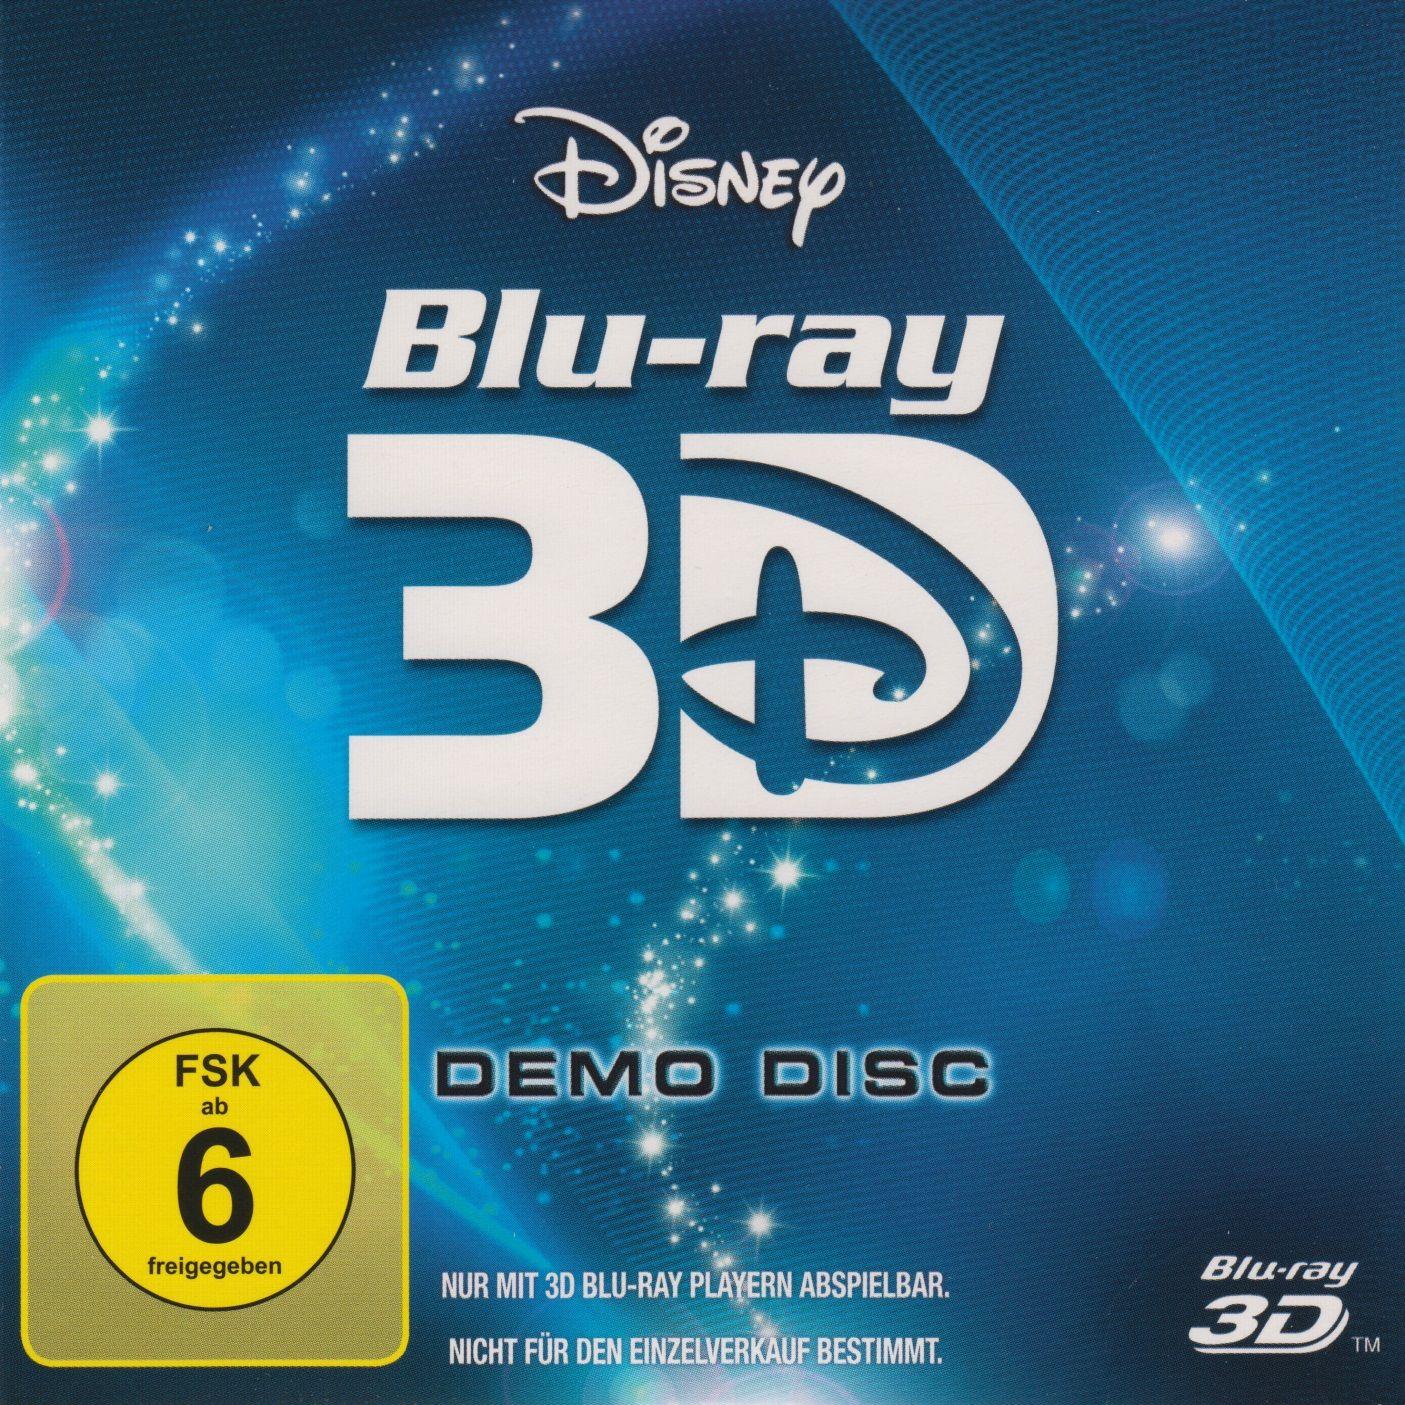 Disney Blu-ray Logo - Disney Blu-Ray 3D Demo Disc 2013